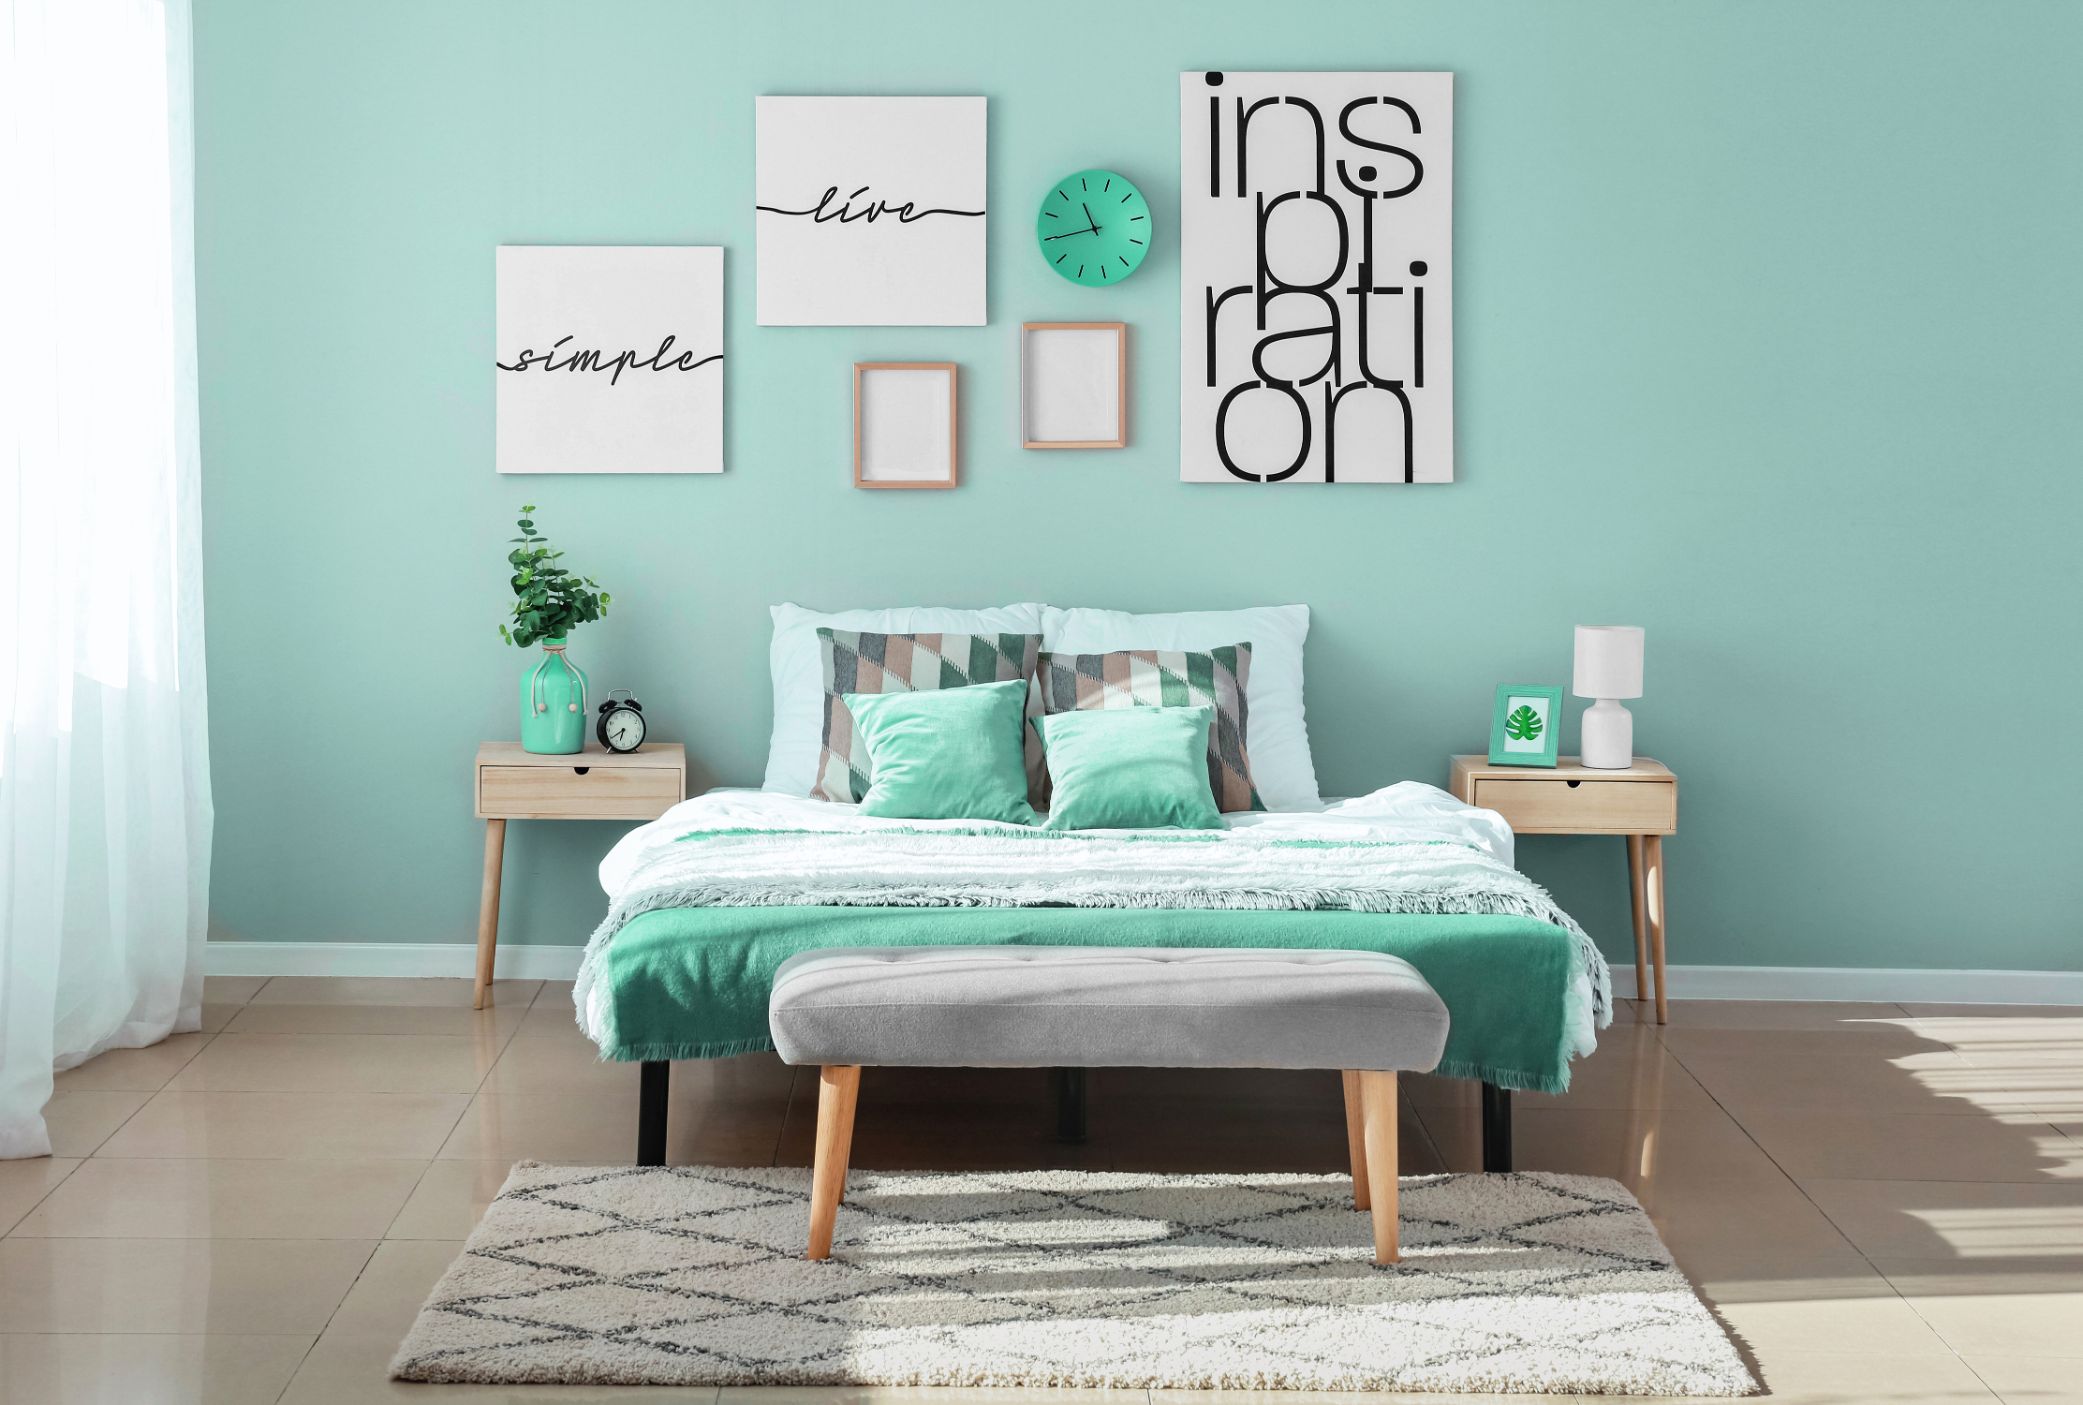 470 Painting/Room Ideas | room, house design, home decor